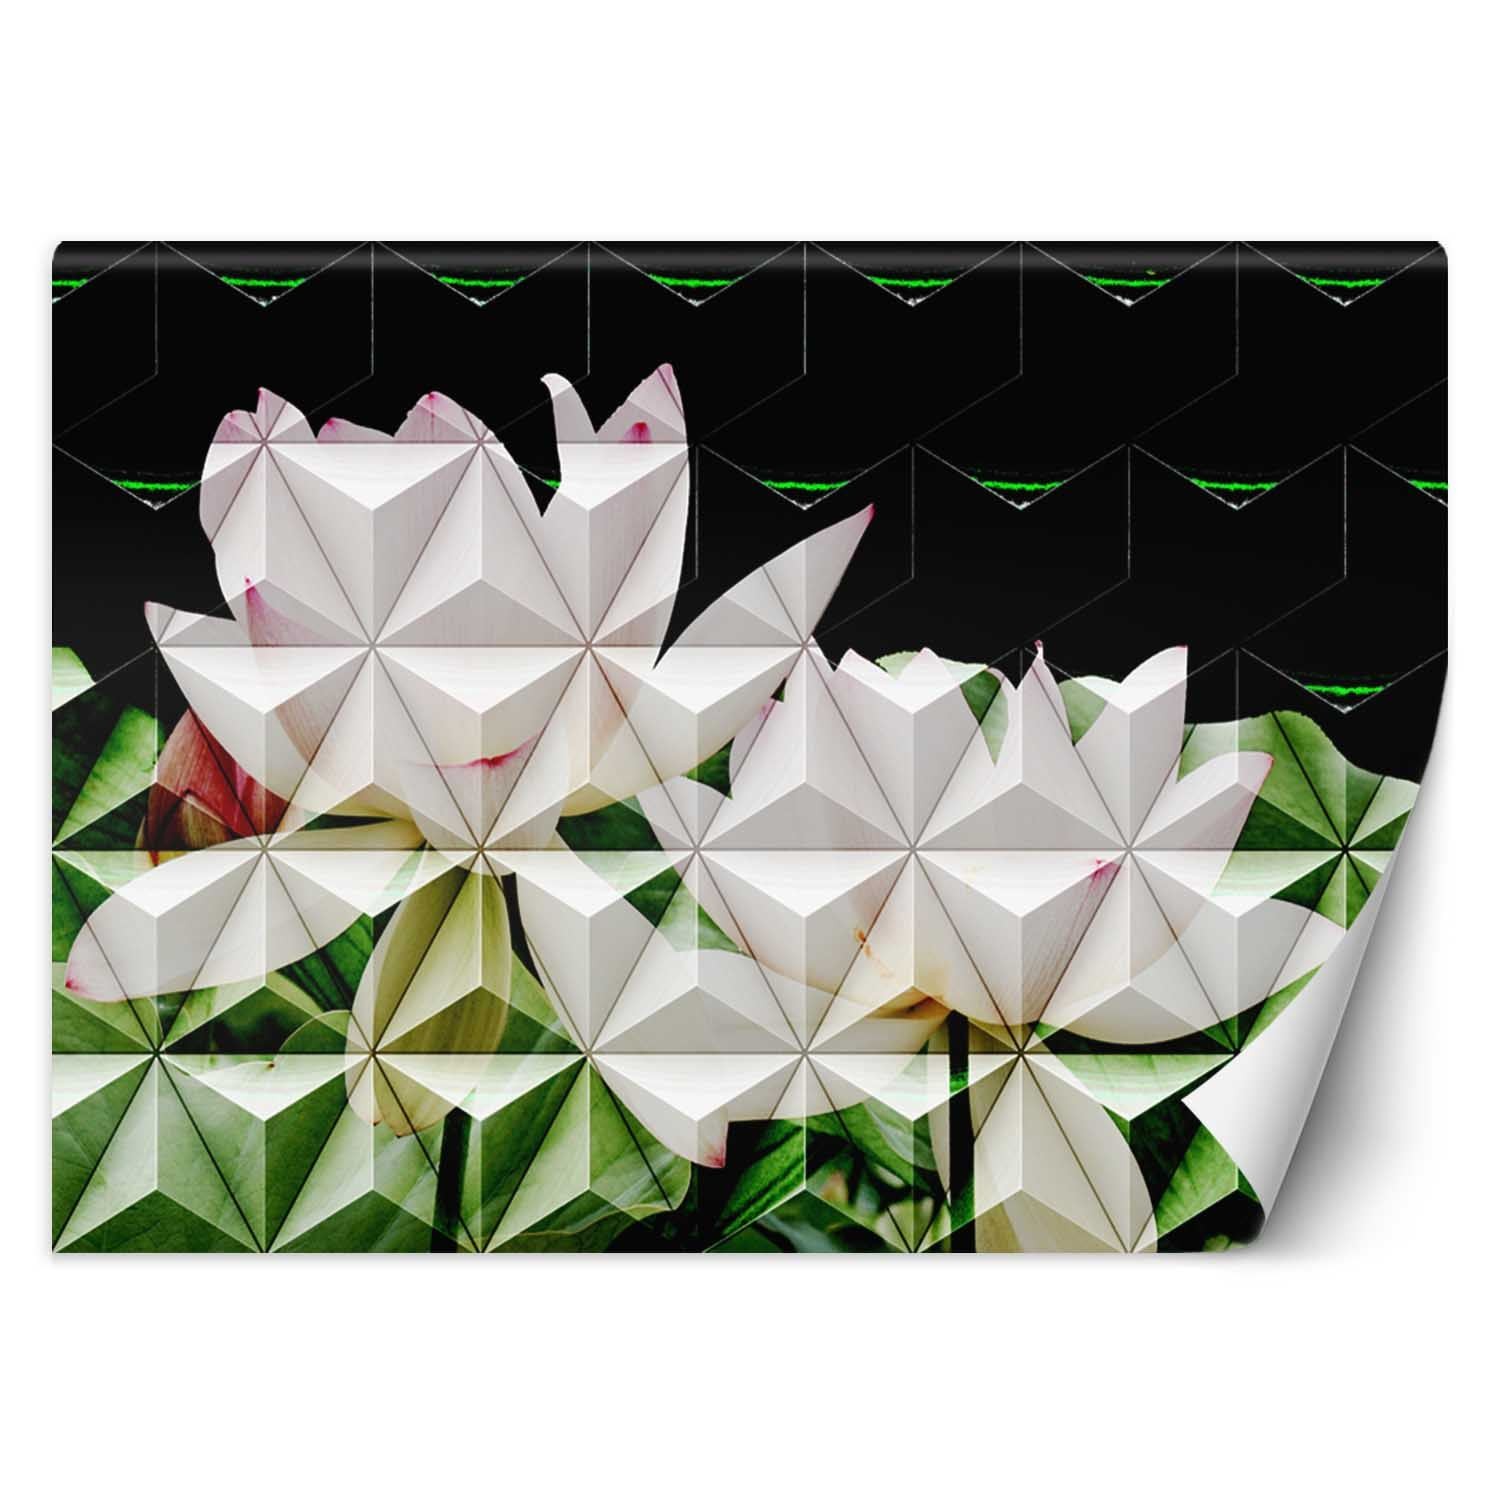 Trend24 – Behang – Lotusbloem Geometrisch – Vliesbehang – Behang Woonkamer – Fotobehang – 450x315x2 cm – Incl. behanglijm